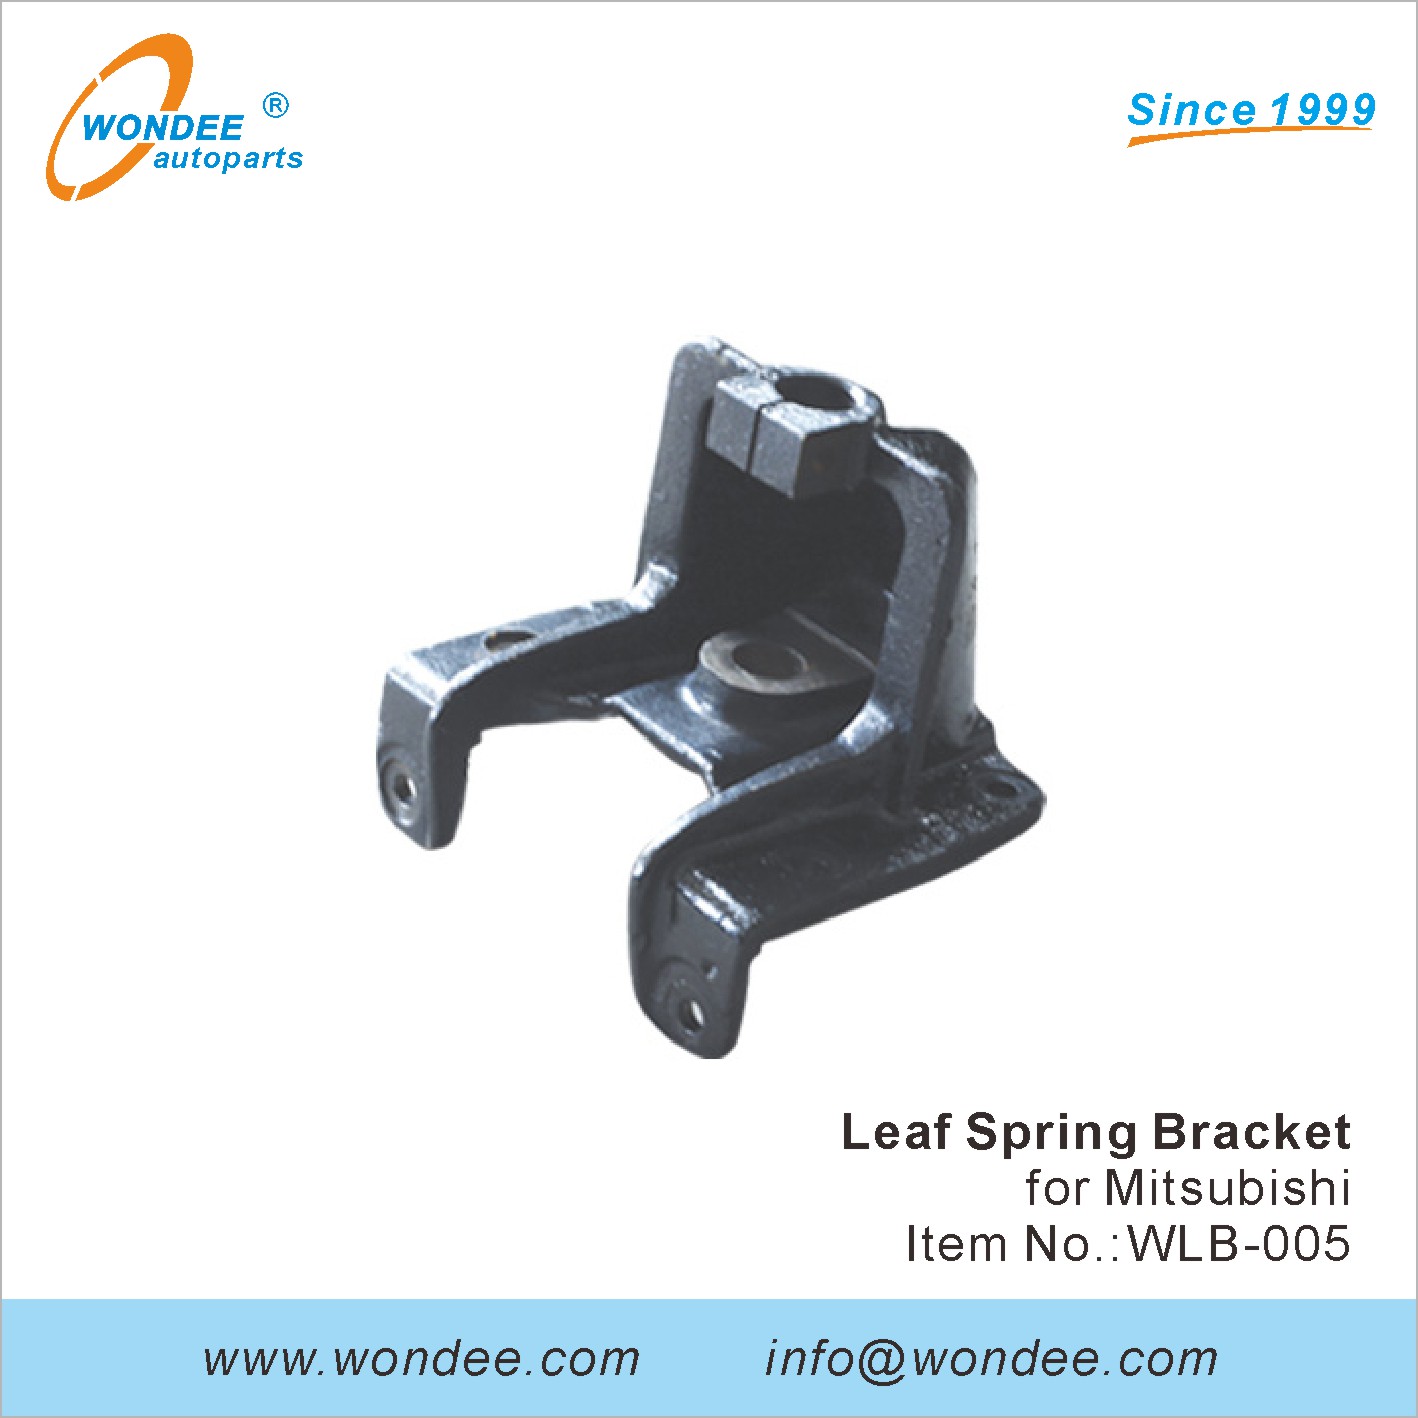 WONDEE leaf spring bracket (5)